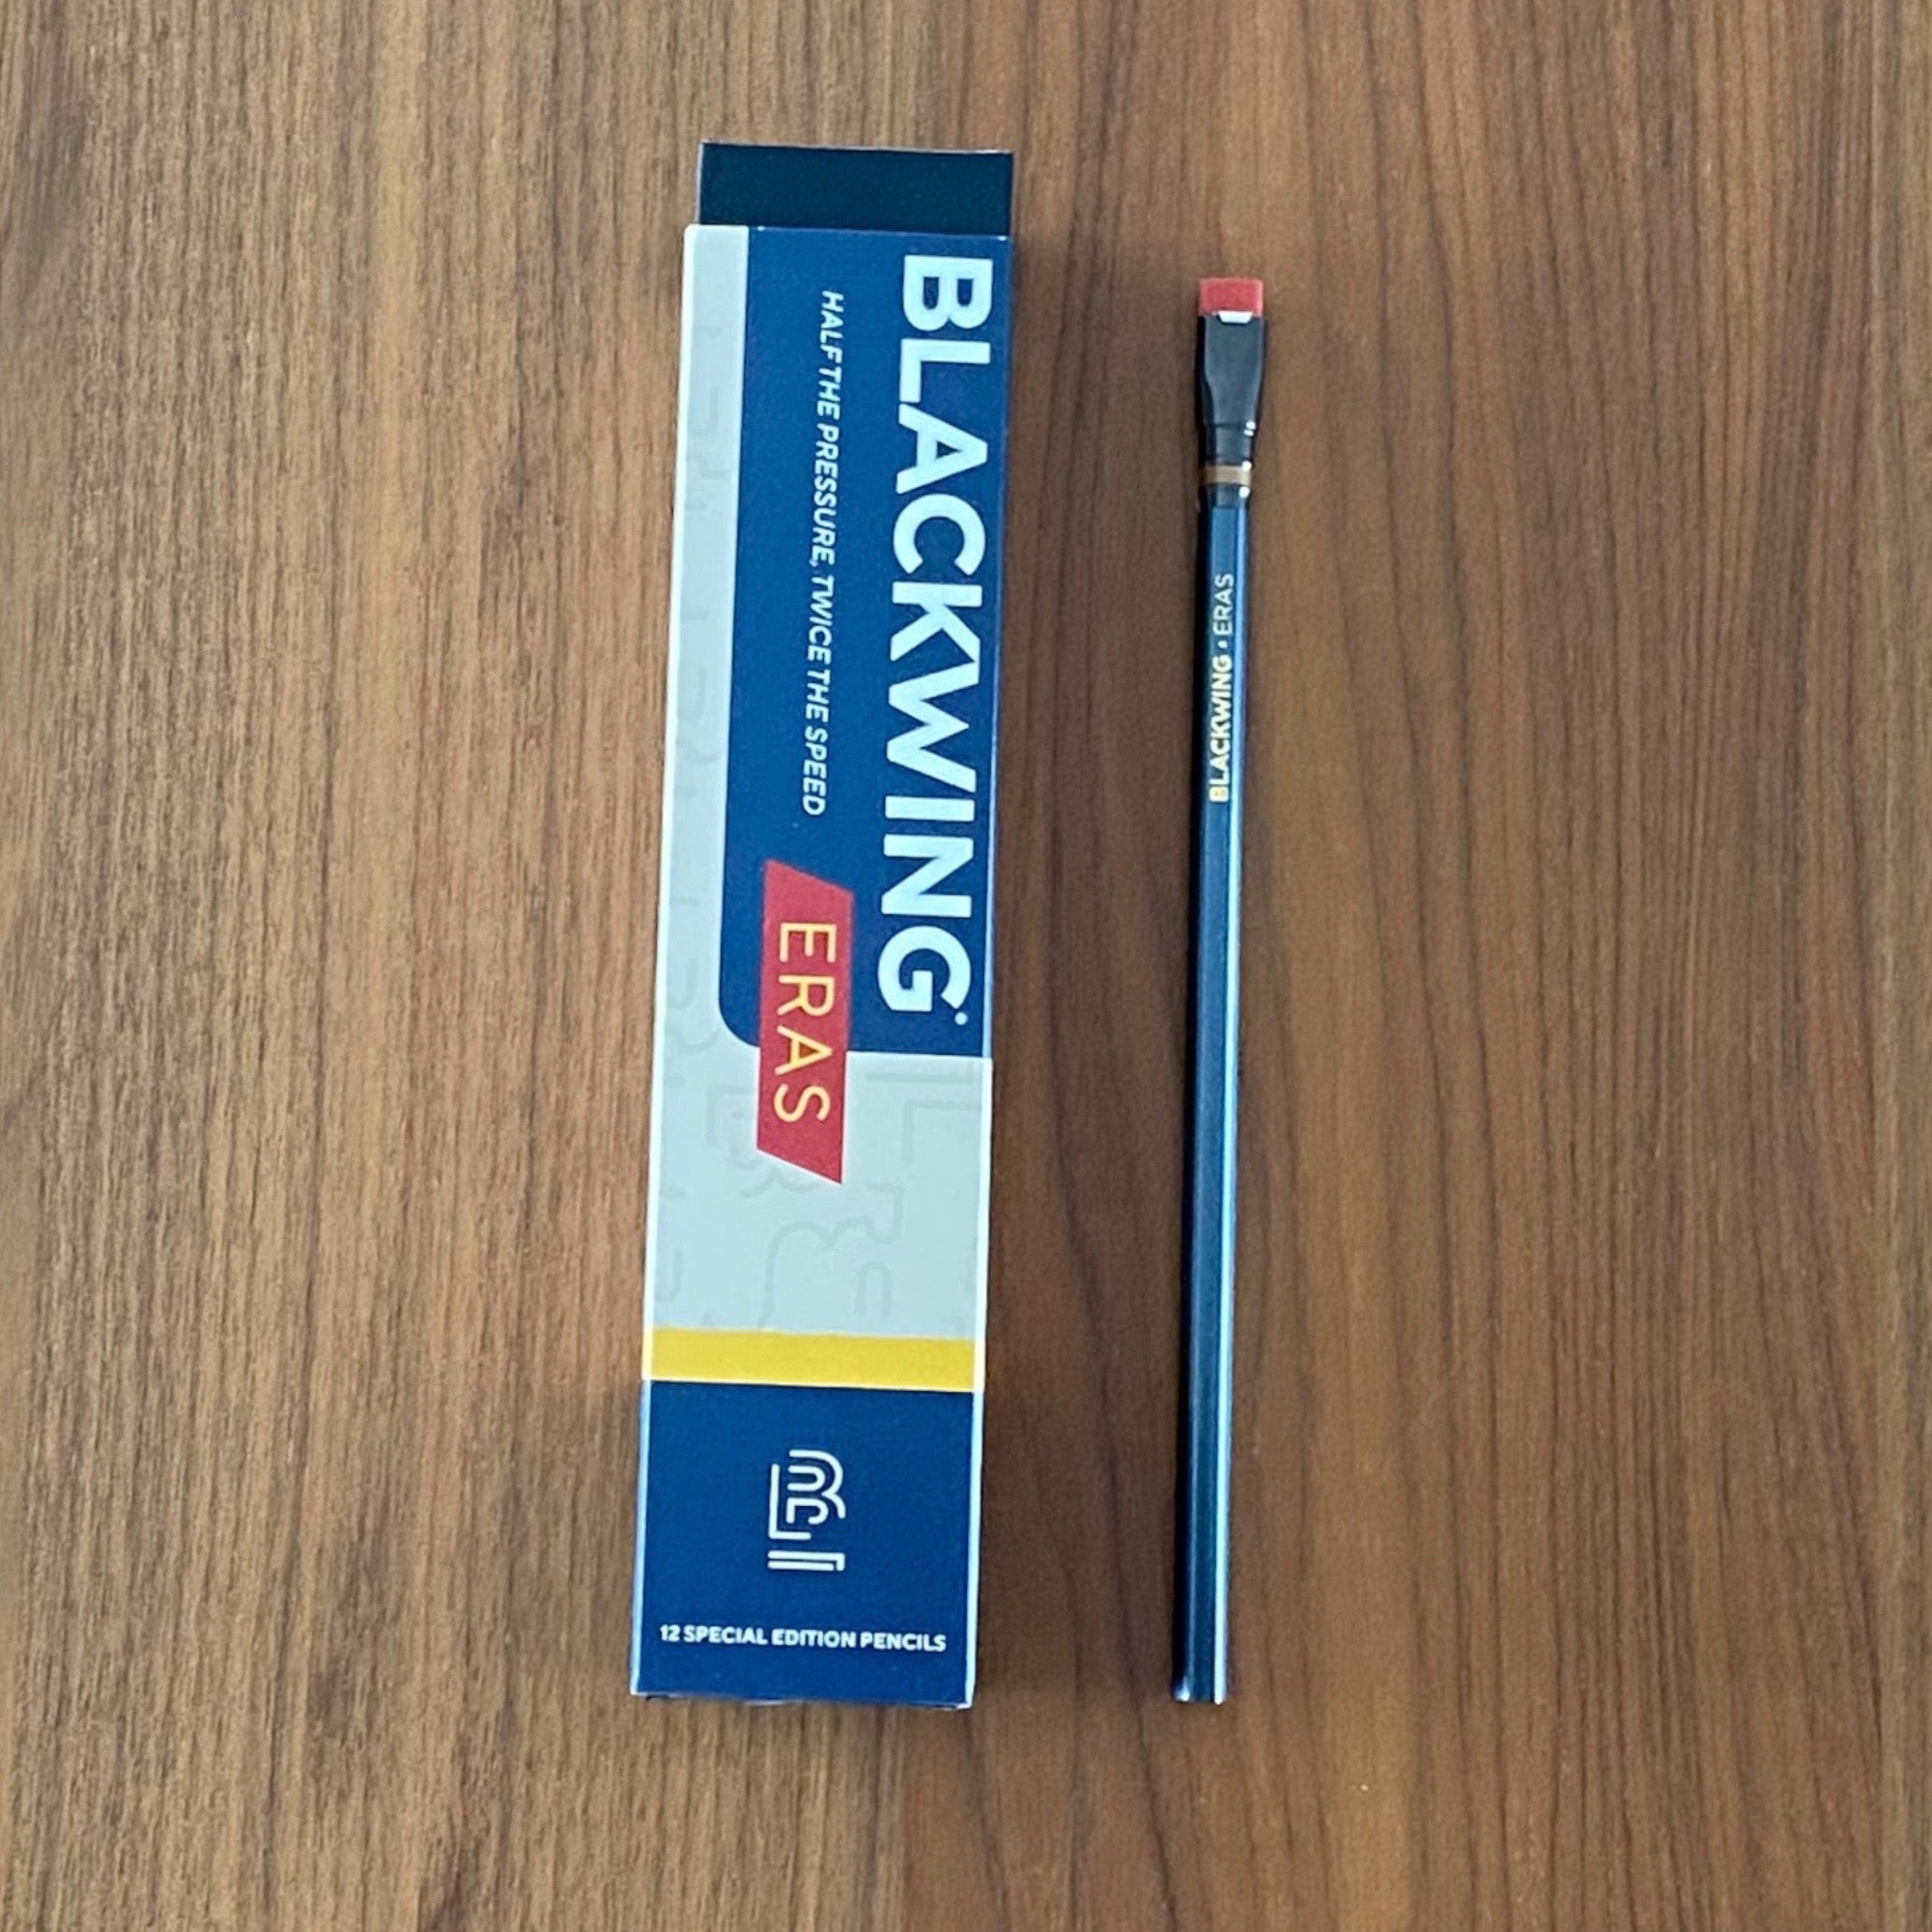 Lápiz Blackwing Eras 2020 + caja original (1 lápiz)